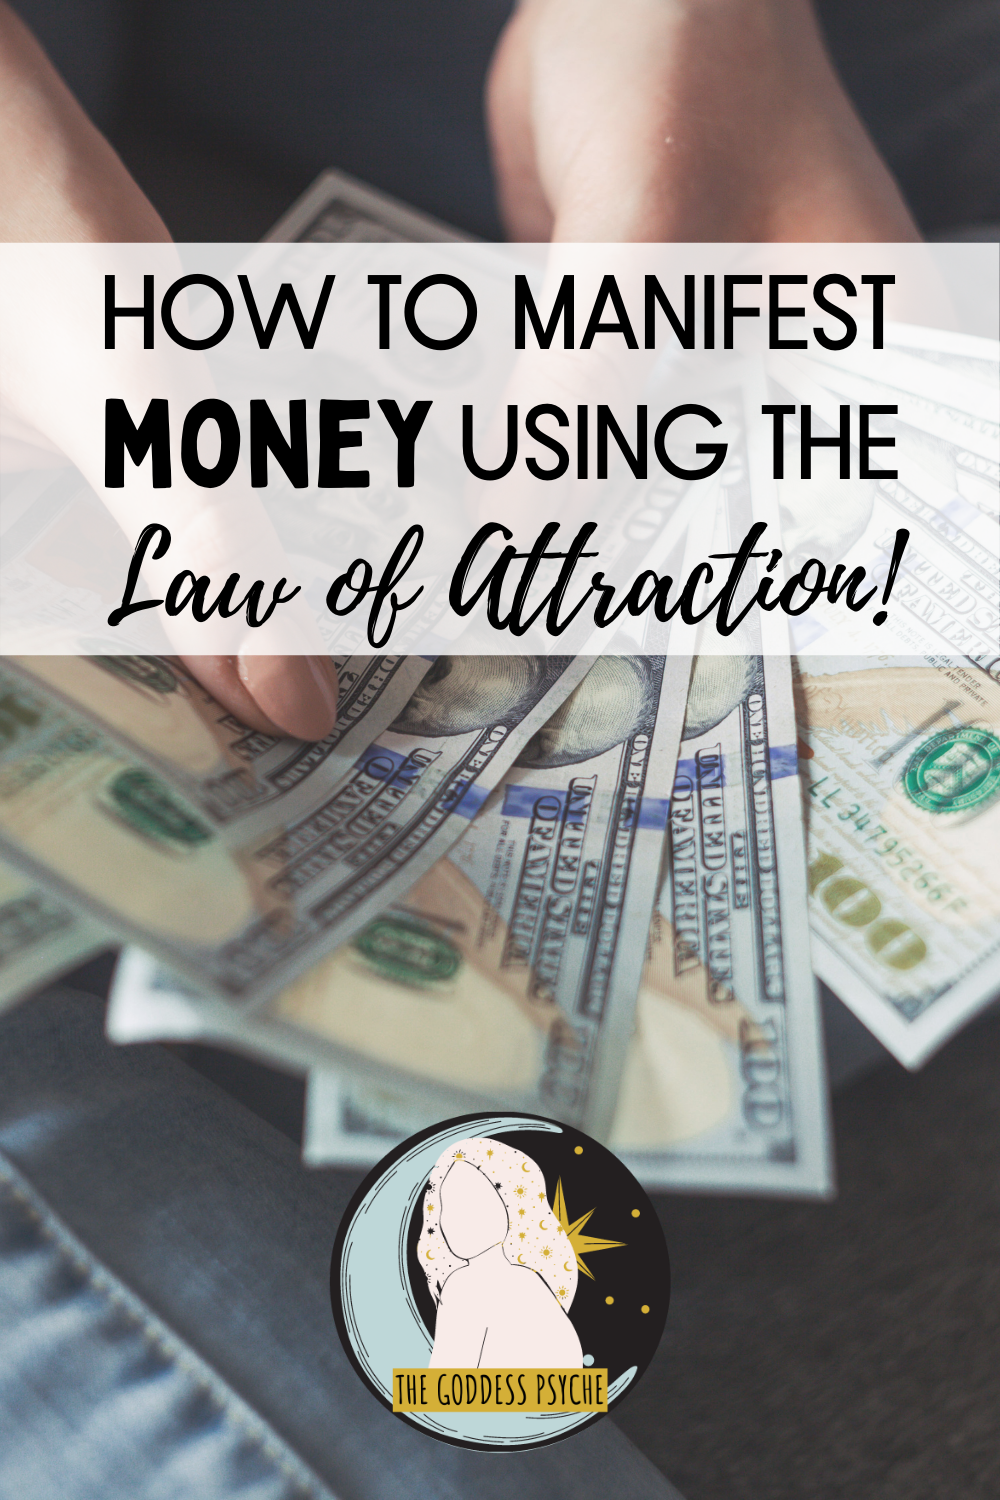 10 Things I Wish I Knew About Wealth Manifestation